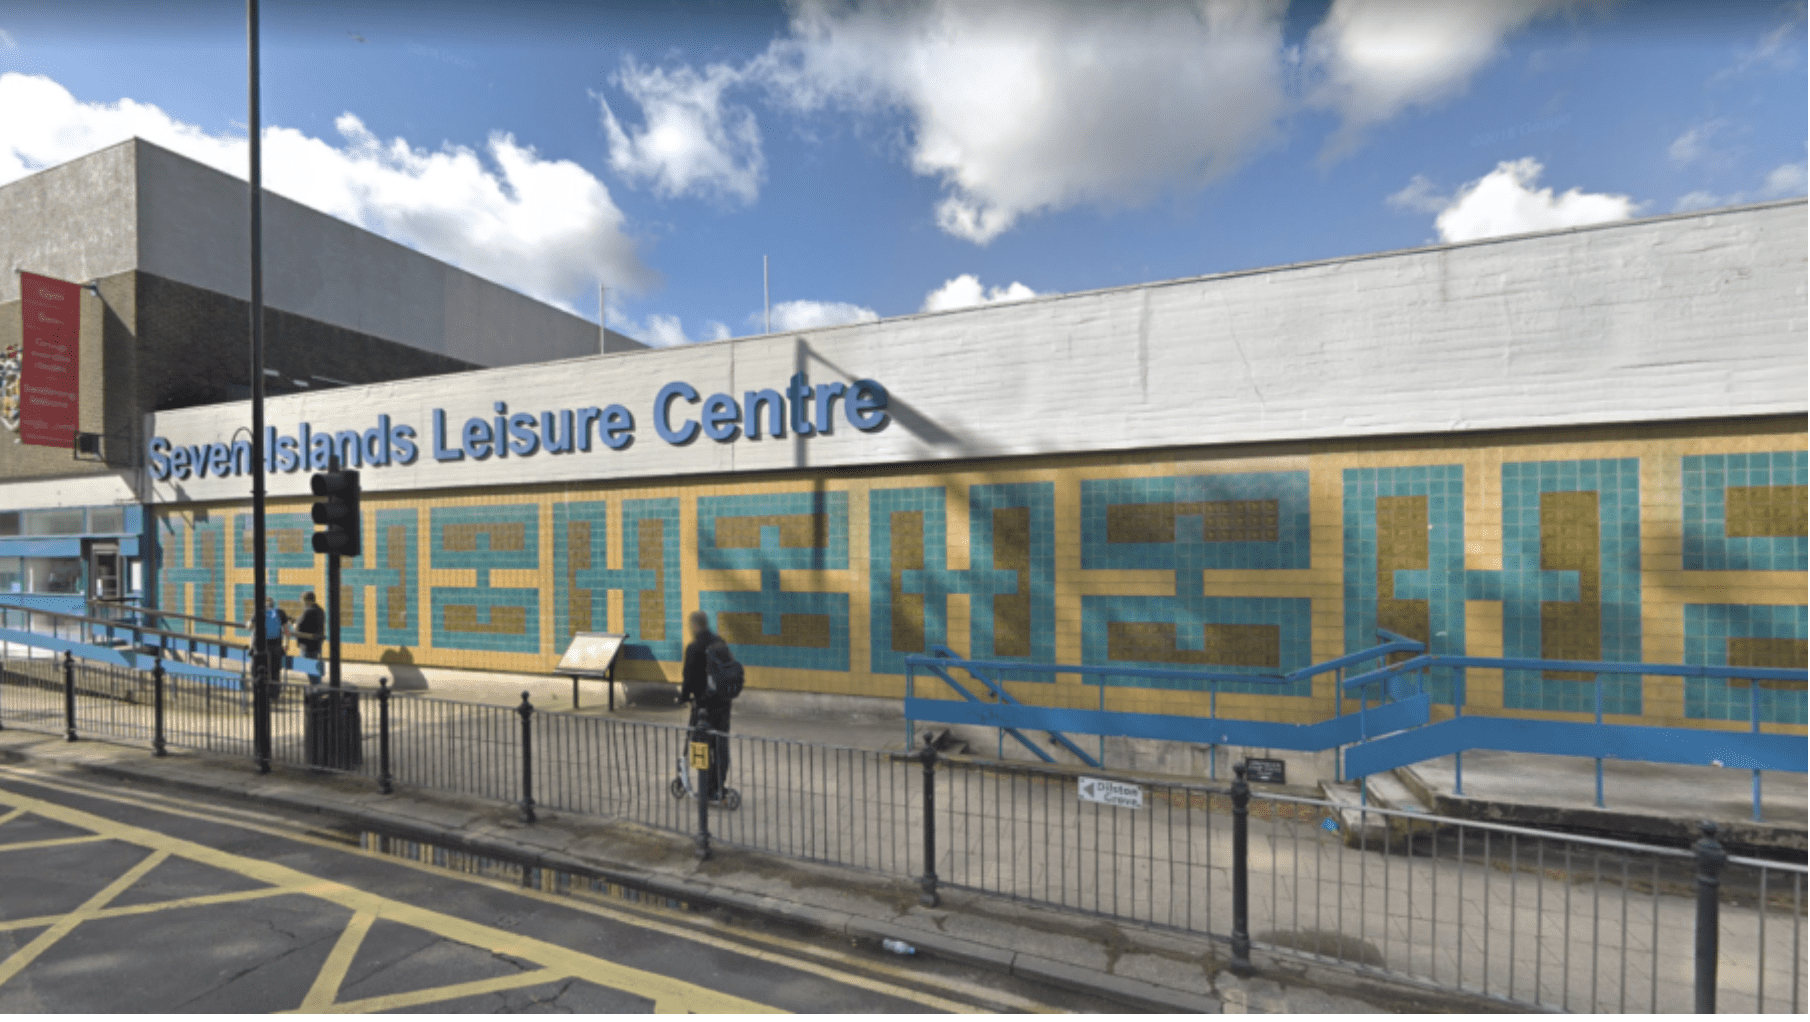 Seven Islands leisure centre, where Southwark Aquatics is based